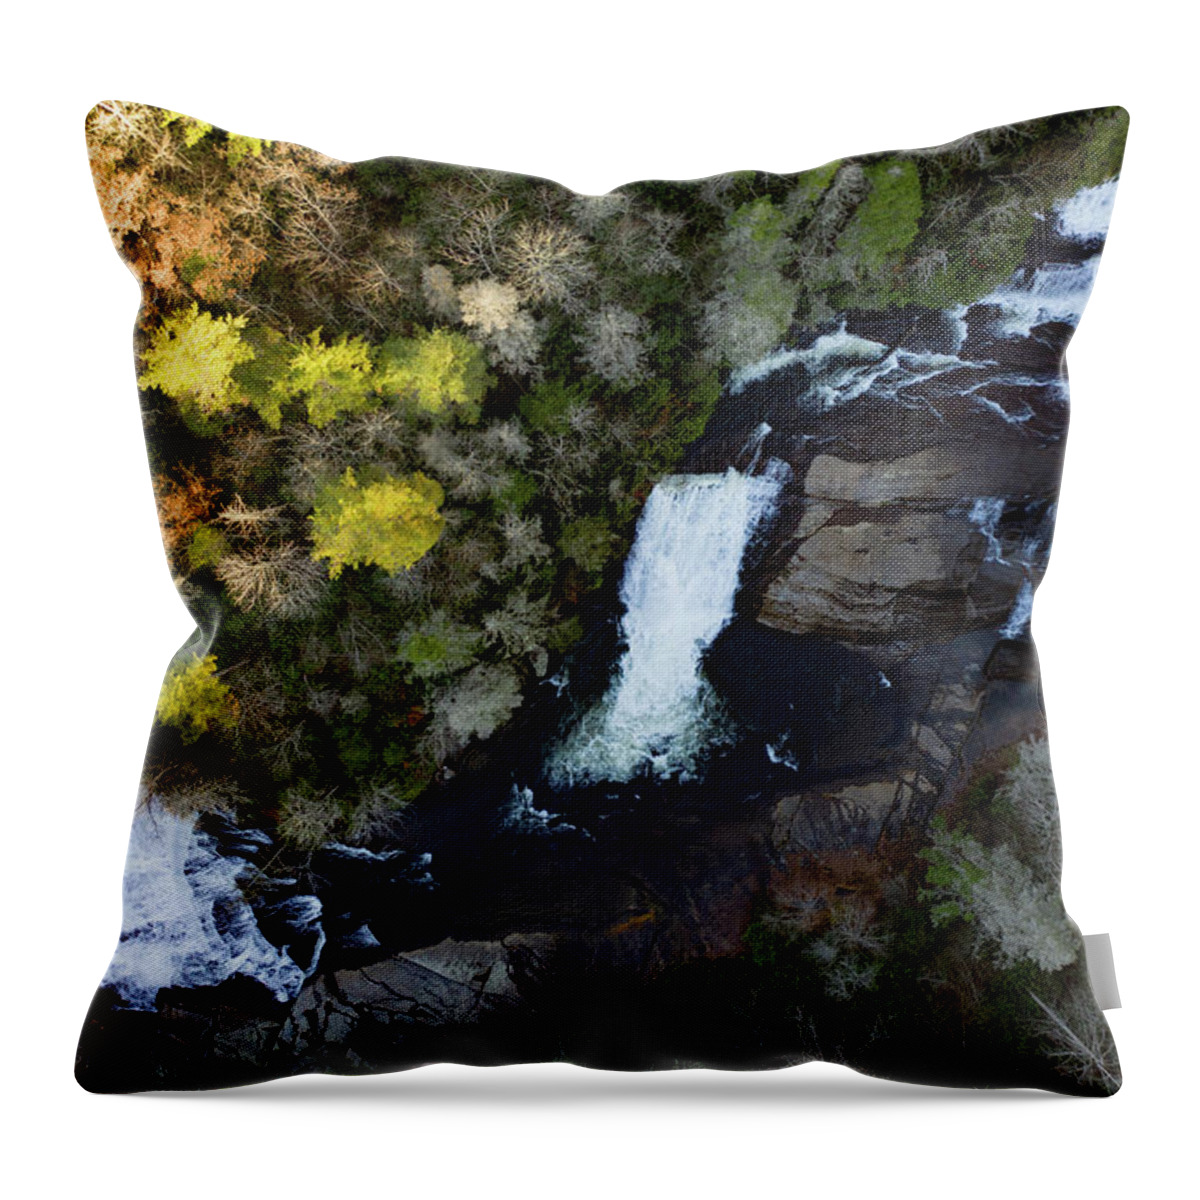 Steve Bunch Throw Pillow featuring the photograph Triple Falls Overhead by Steve Bunch